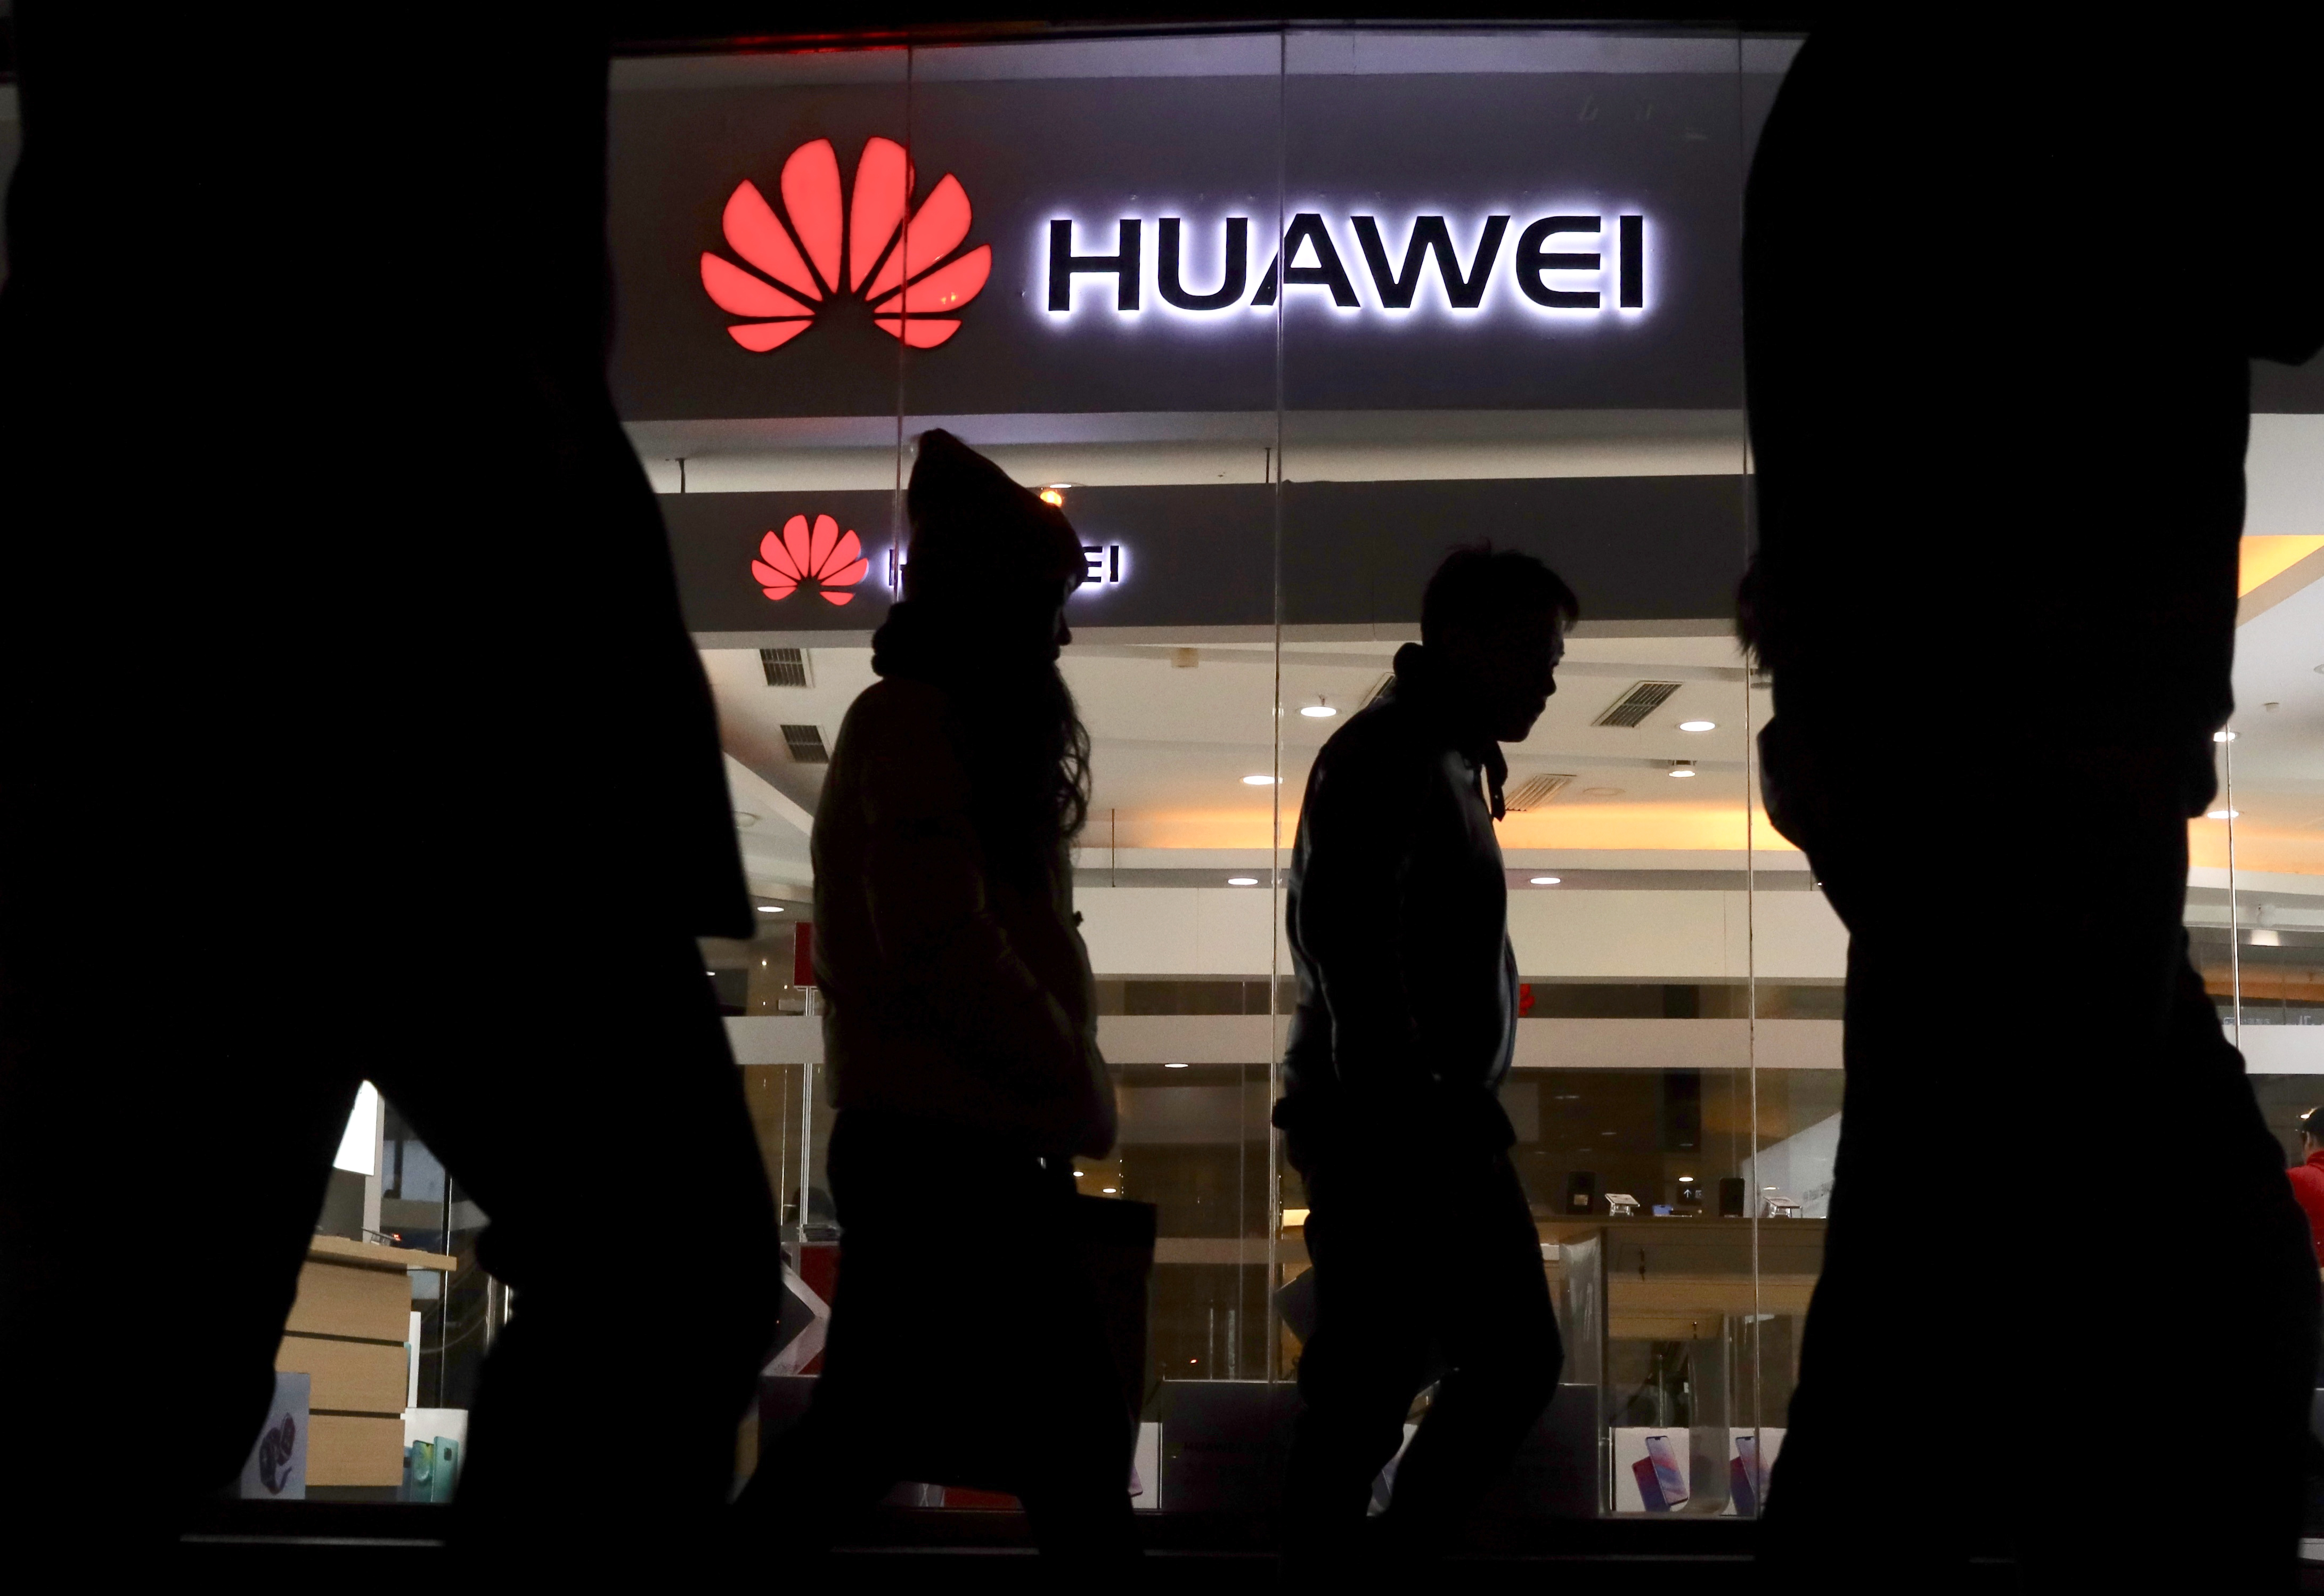 jammer gun oil sds , Executive’s Arrest, Security Worries Stymie Huawei’s Reach